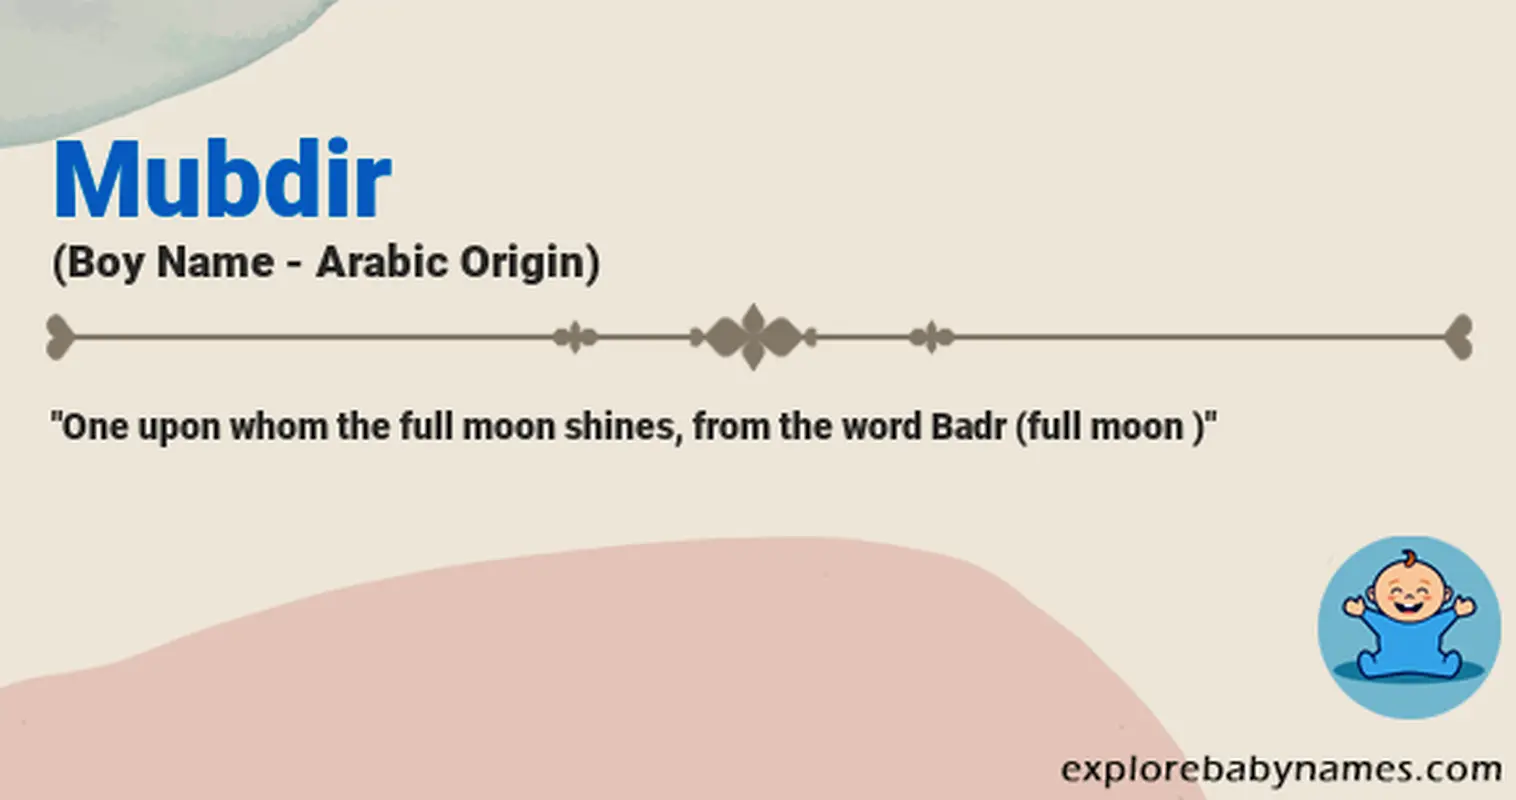 Meaning of Mubdir